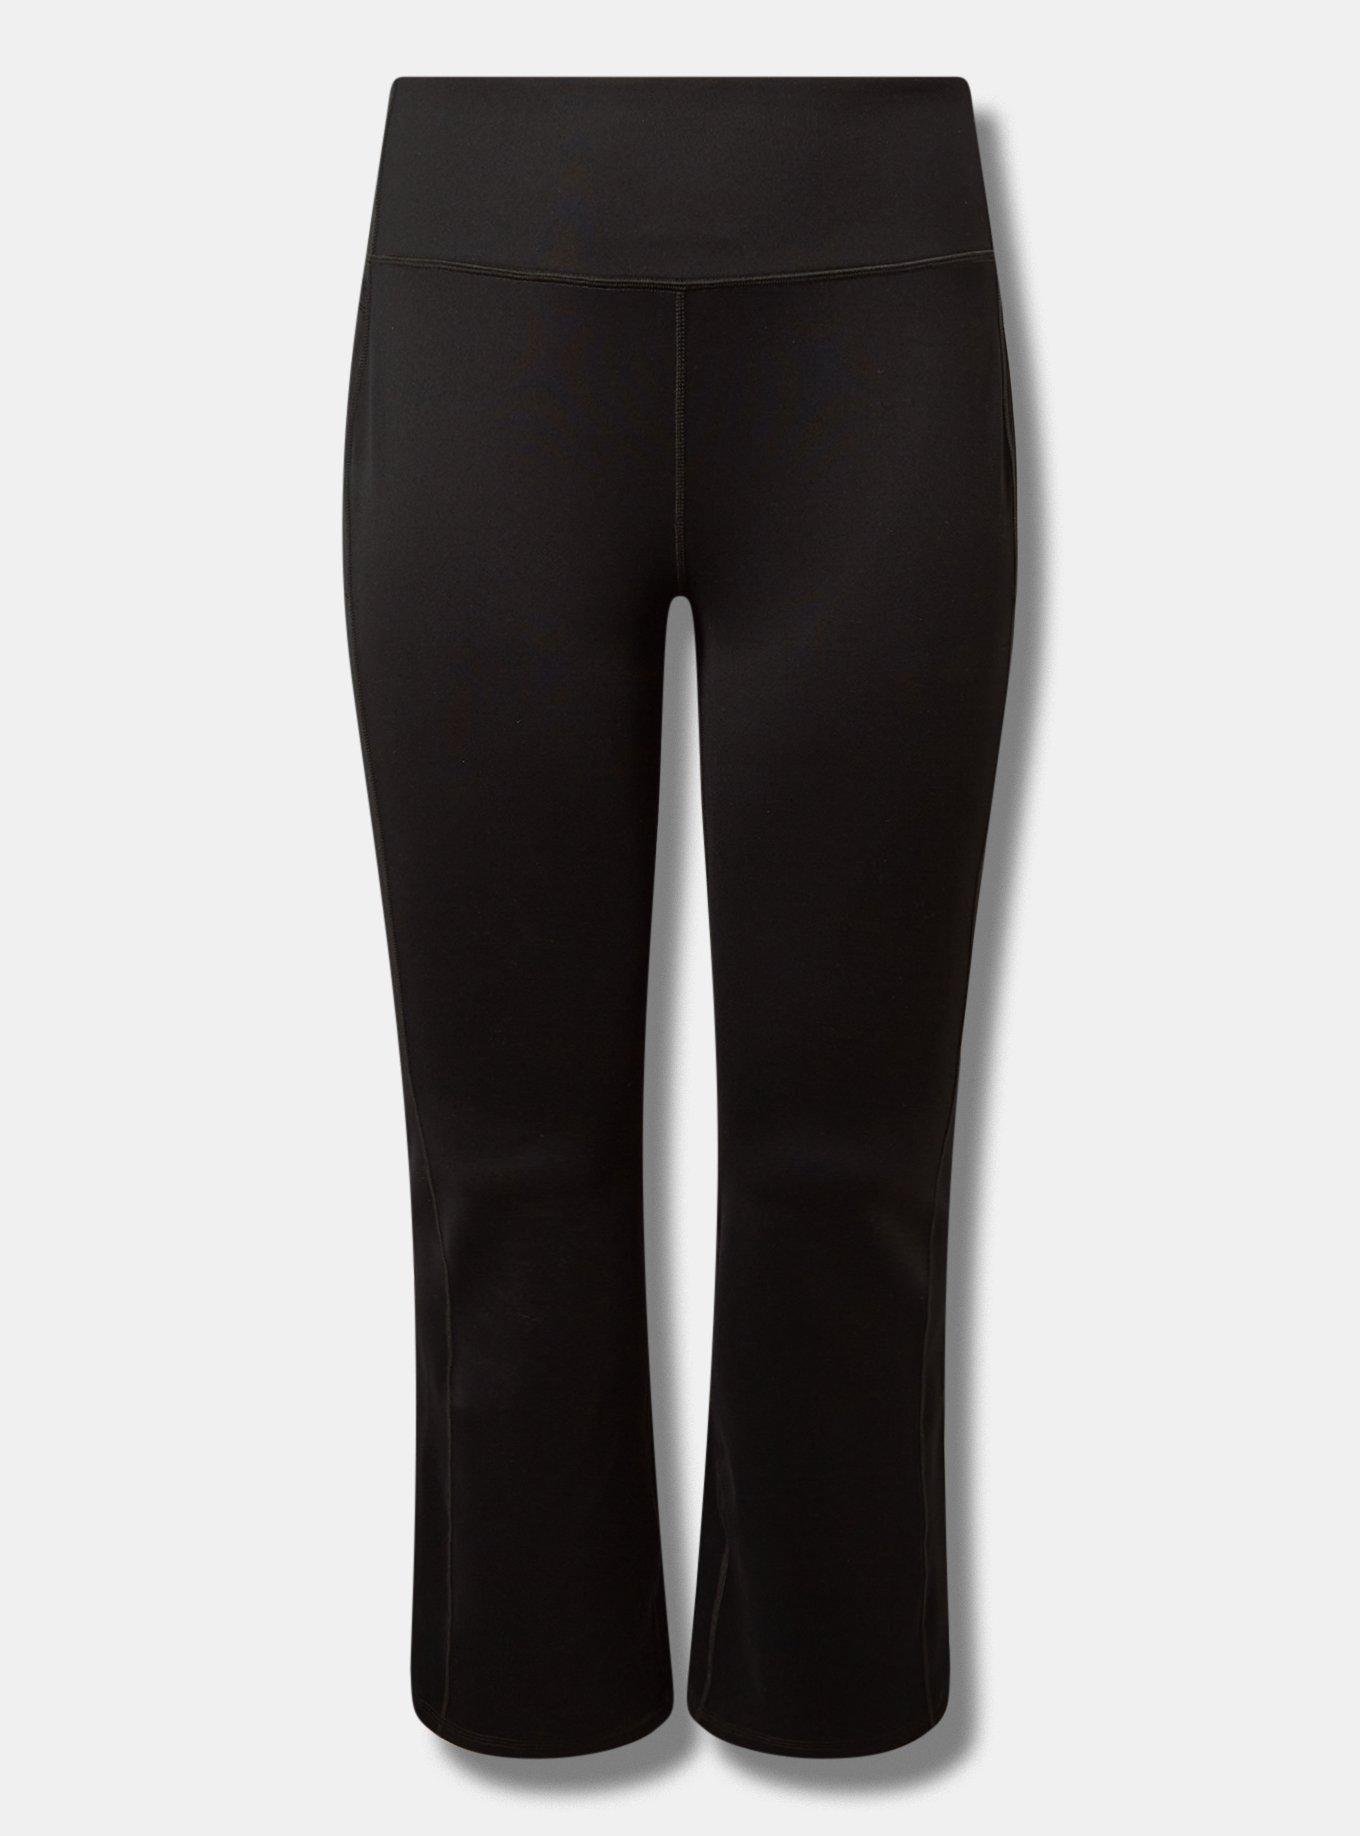 STRETCH IS COMFORT Women Plus Size High Waist Cotton Bootcut Yoga Pants |  XL-7X